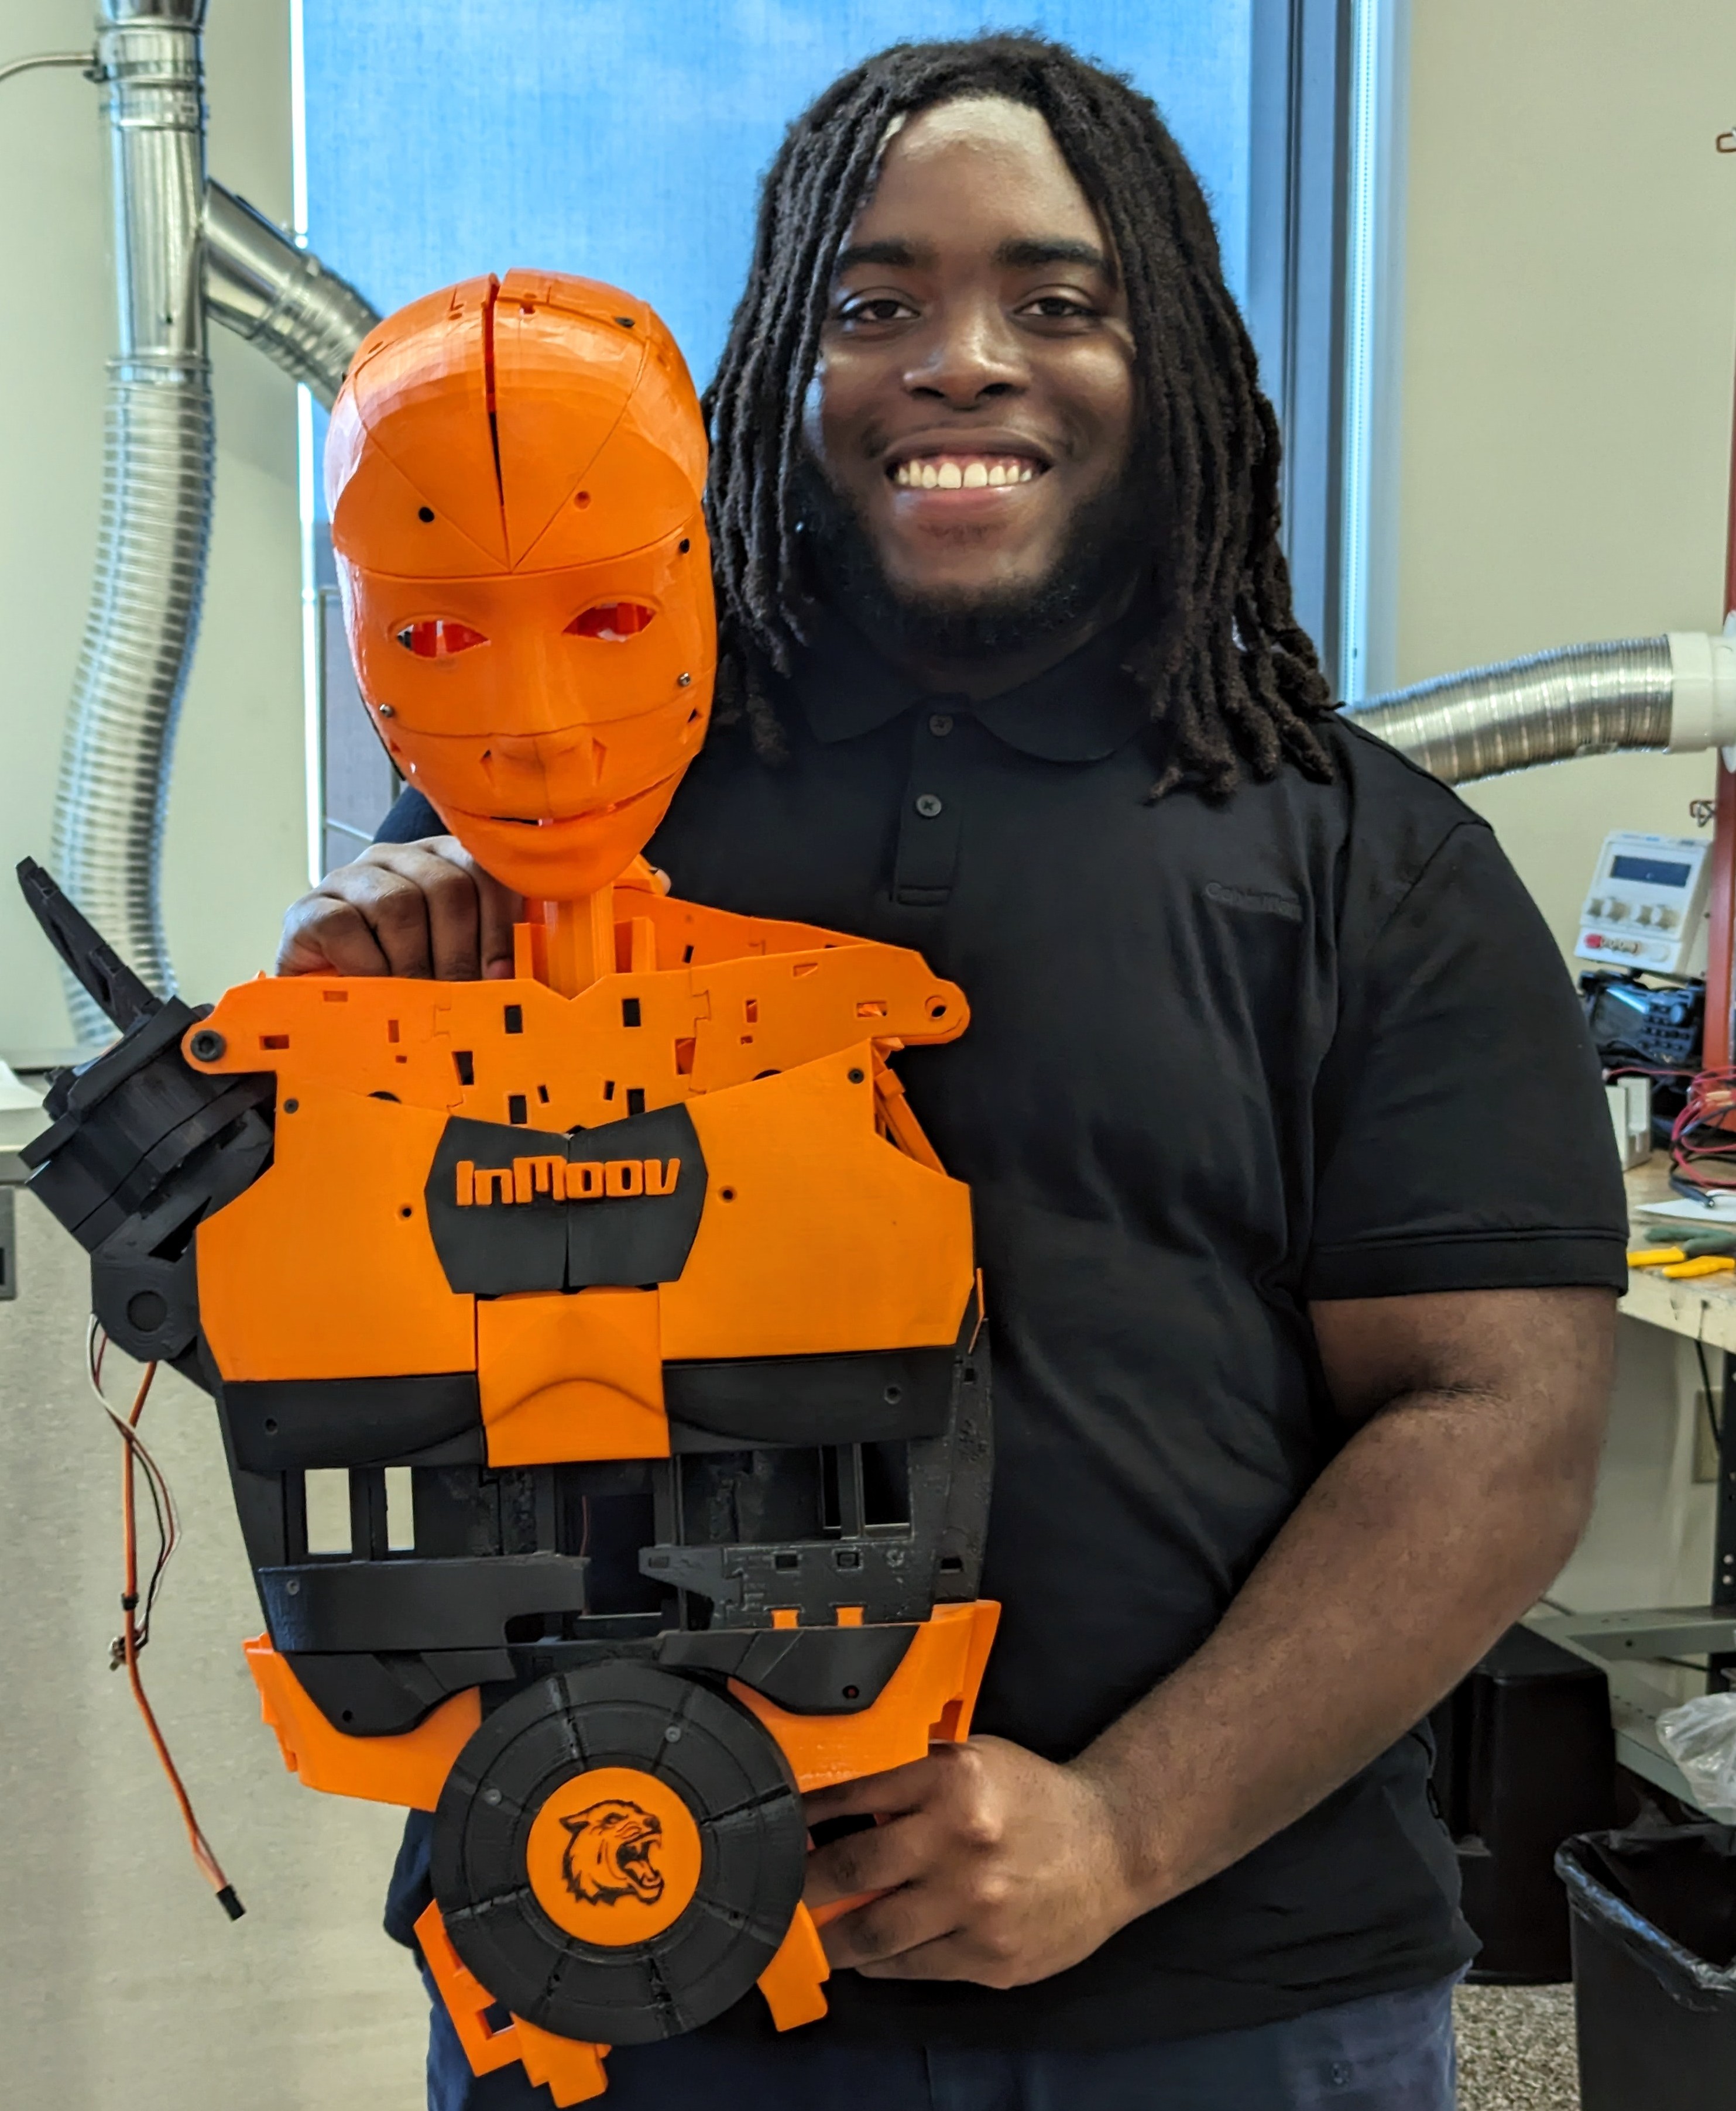 black man holding orange and black figure